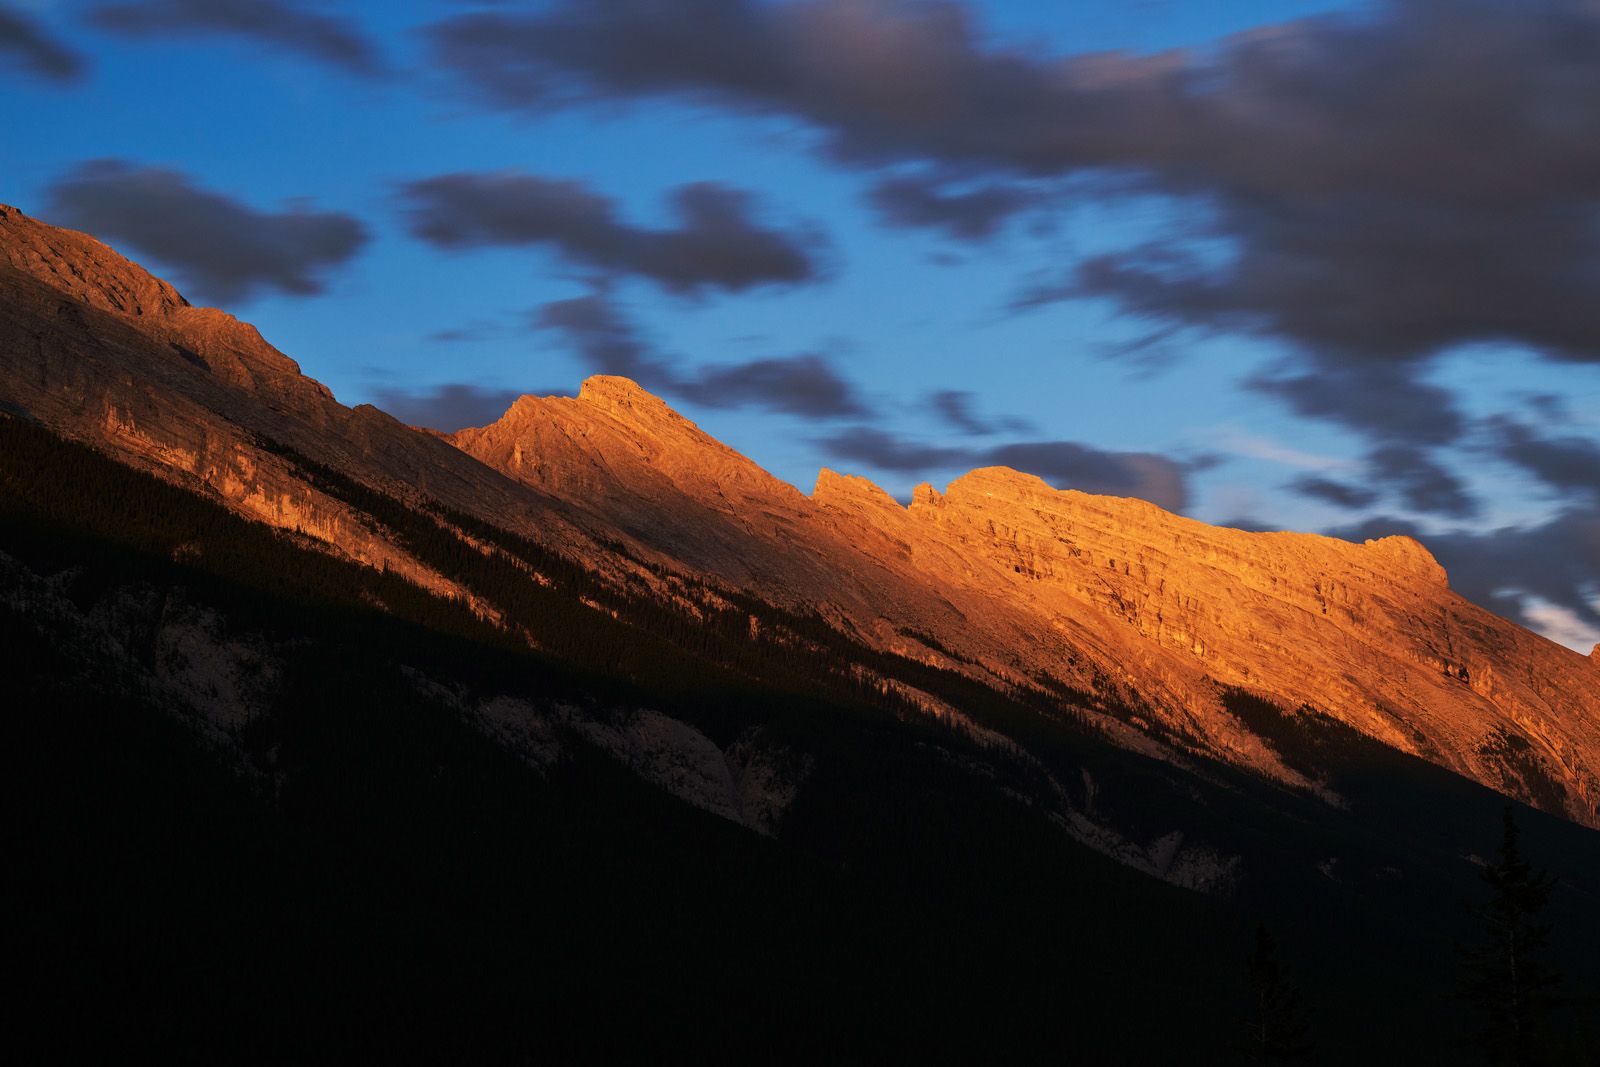 Alpen glow as seen at the Rim Rock Resort Hotel in Banff, Alberta, Canada.